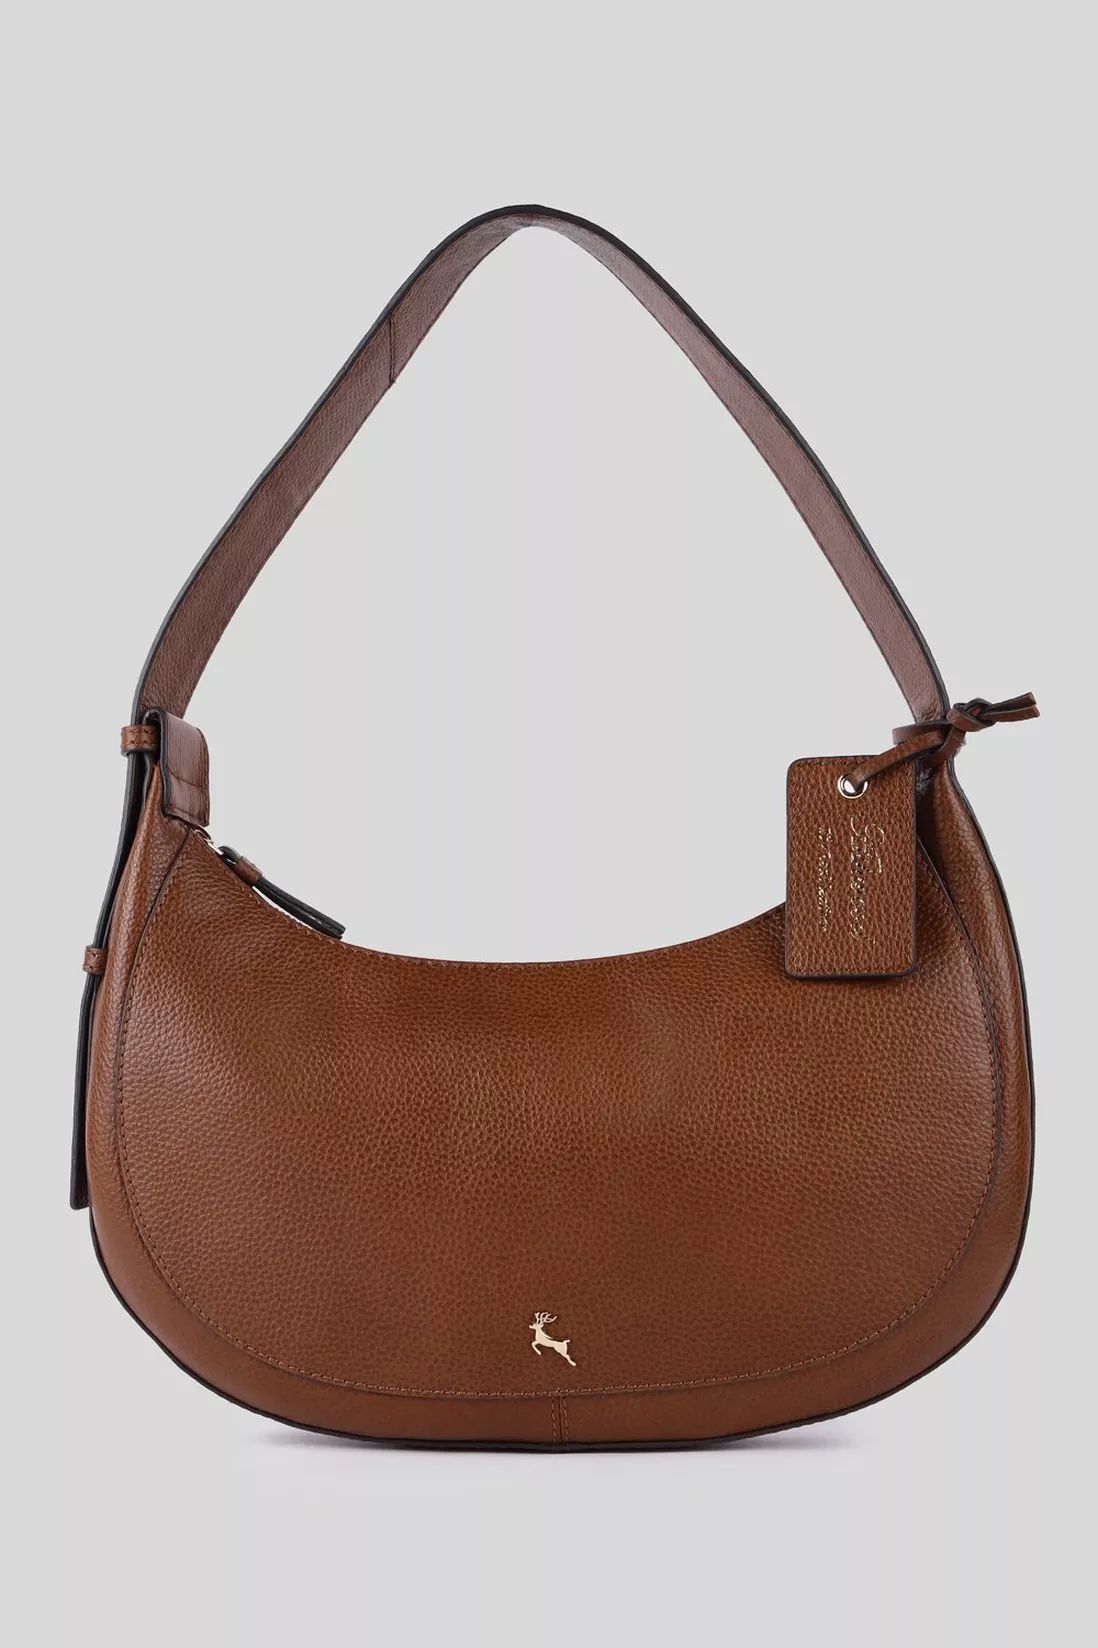 'Tesoro di Bologna' Real Leather Shoulder Bag | Debenhams UK